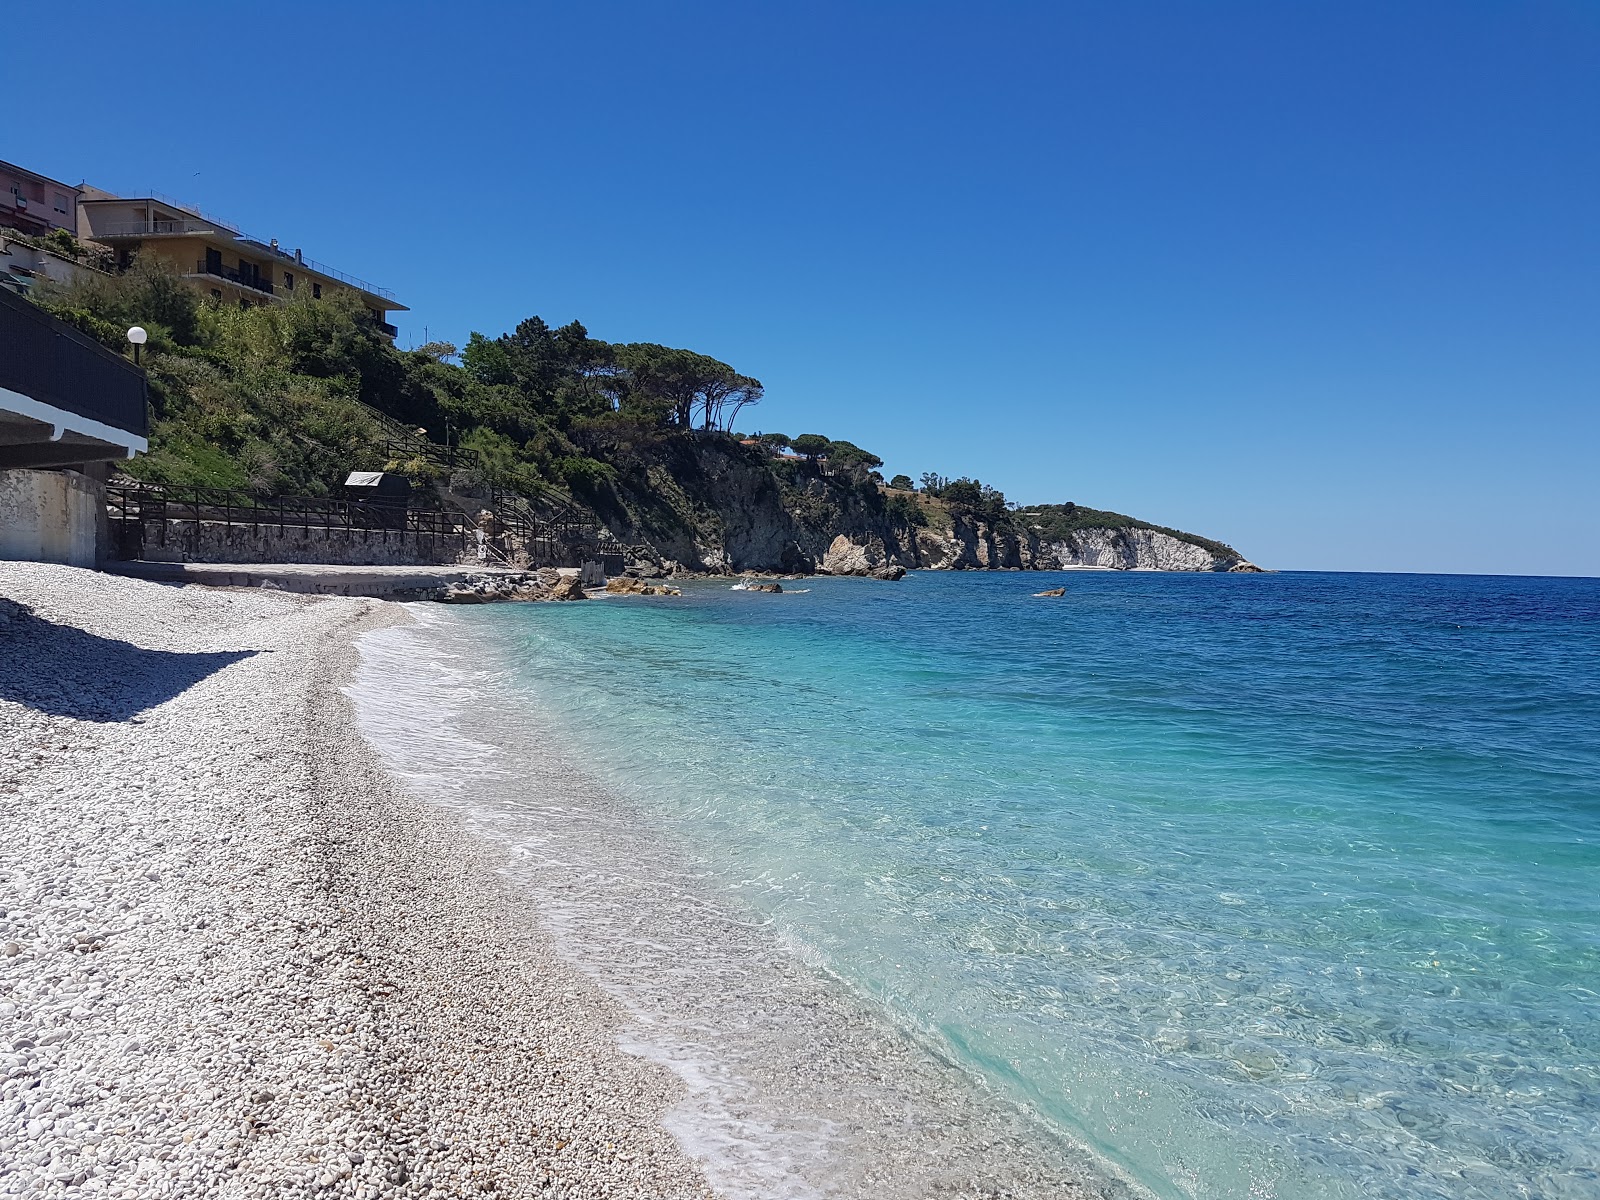 Foto de Spiaggia delle Ghiaie com praia espaçosa